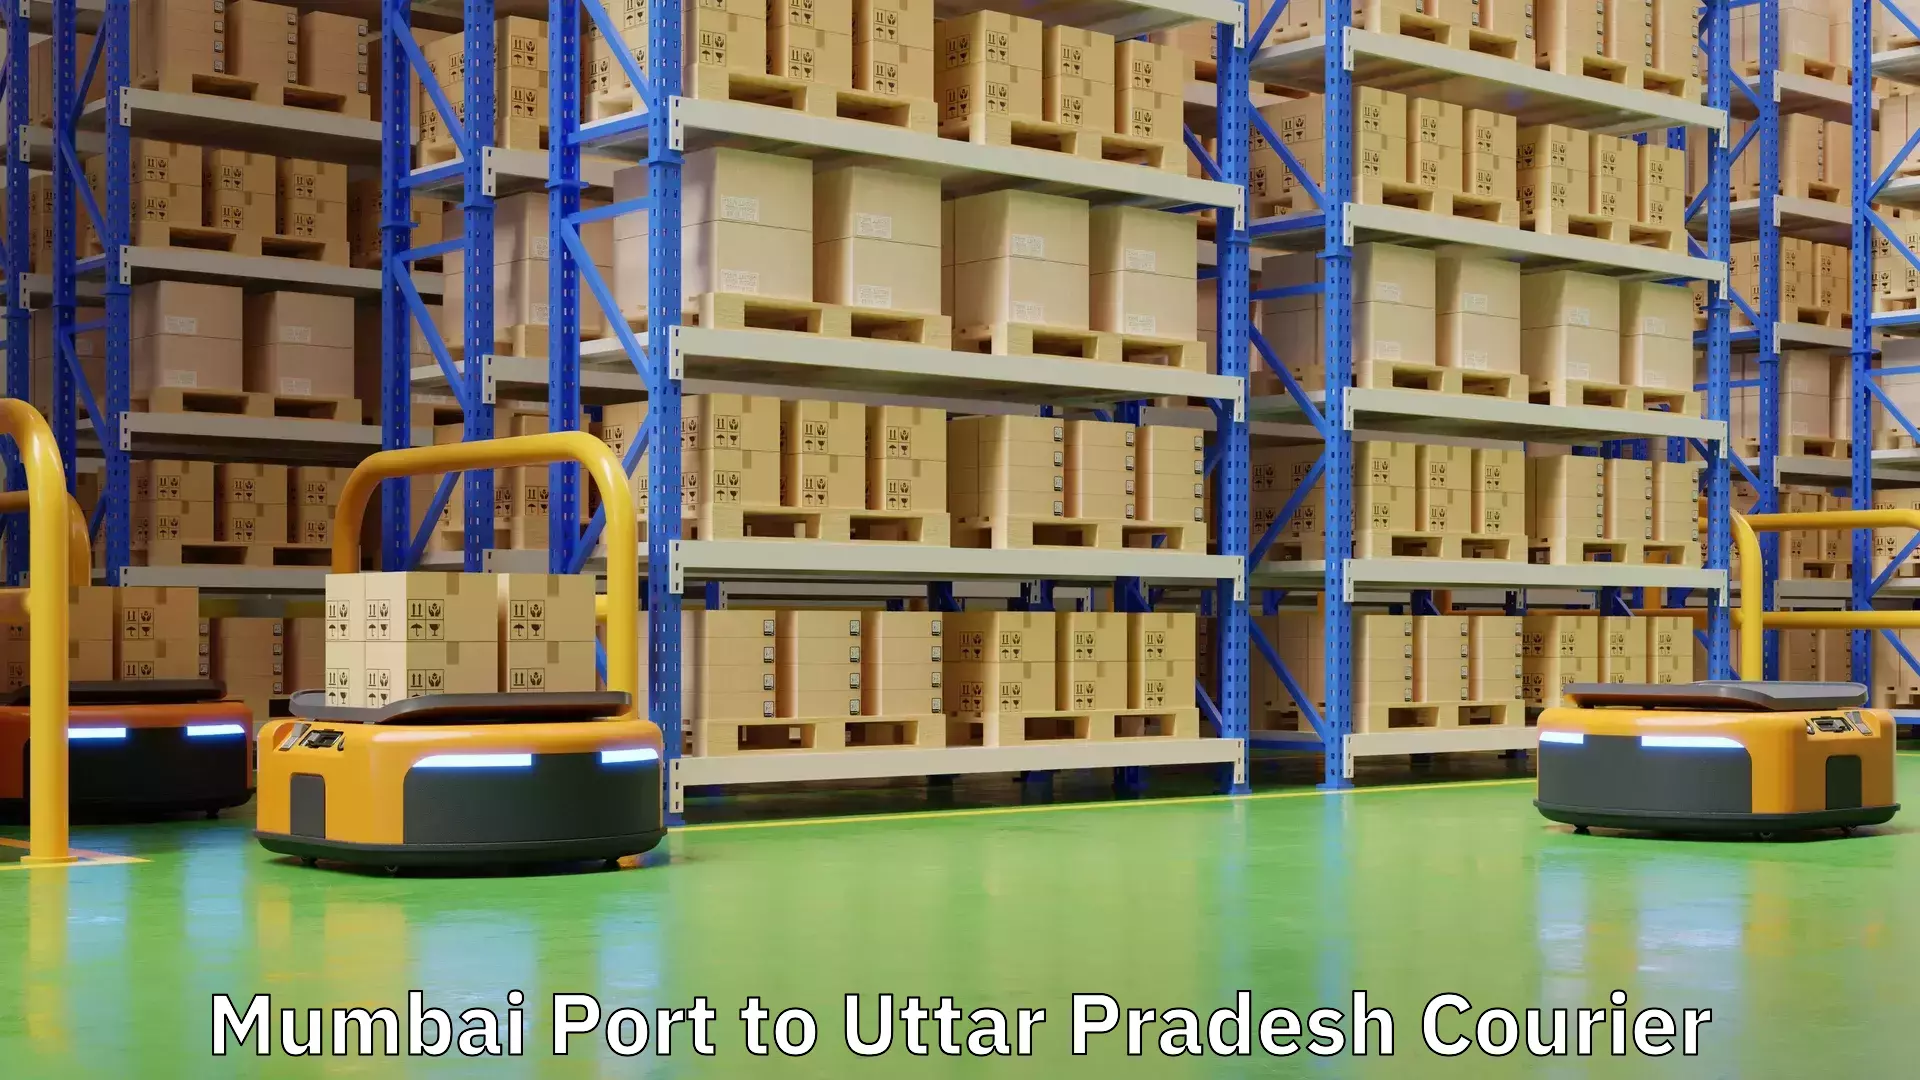 Holiday shipping services Mumbai Port to Uttar Pradesh